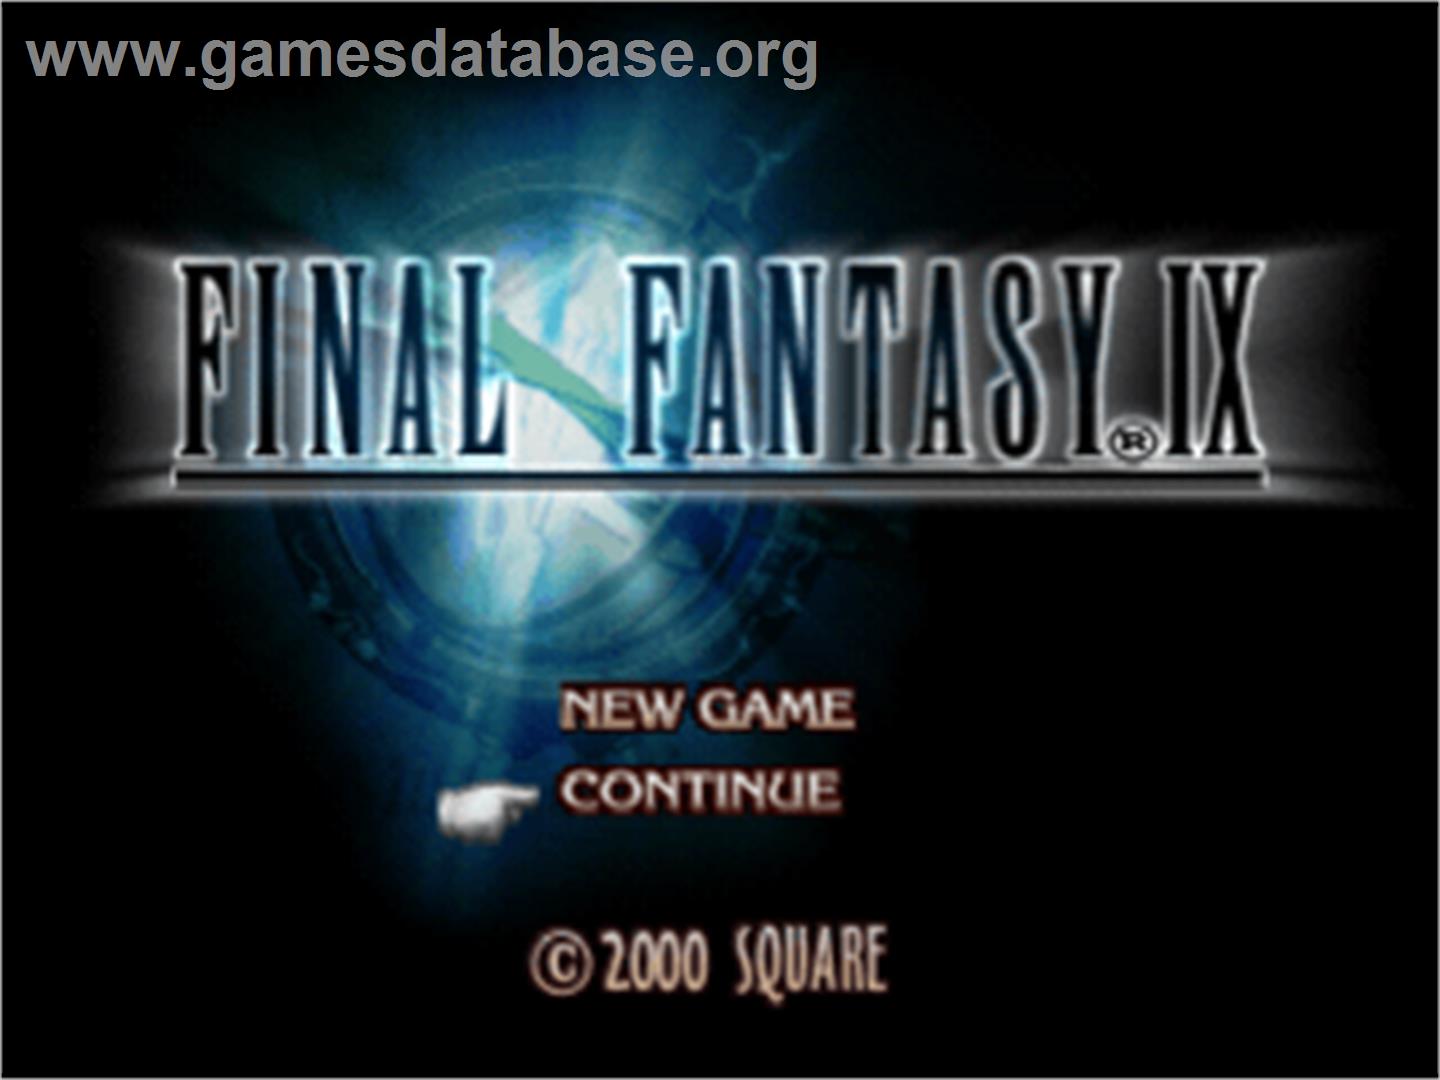 Final Fantasy IX - Sony Playstation - Artwork - Title Screen